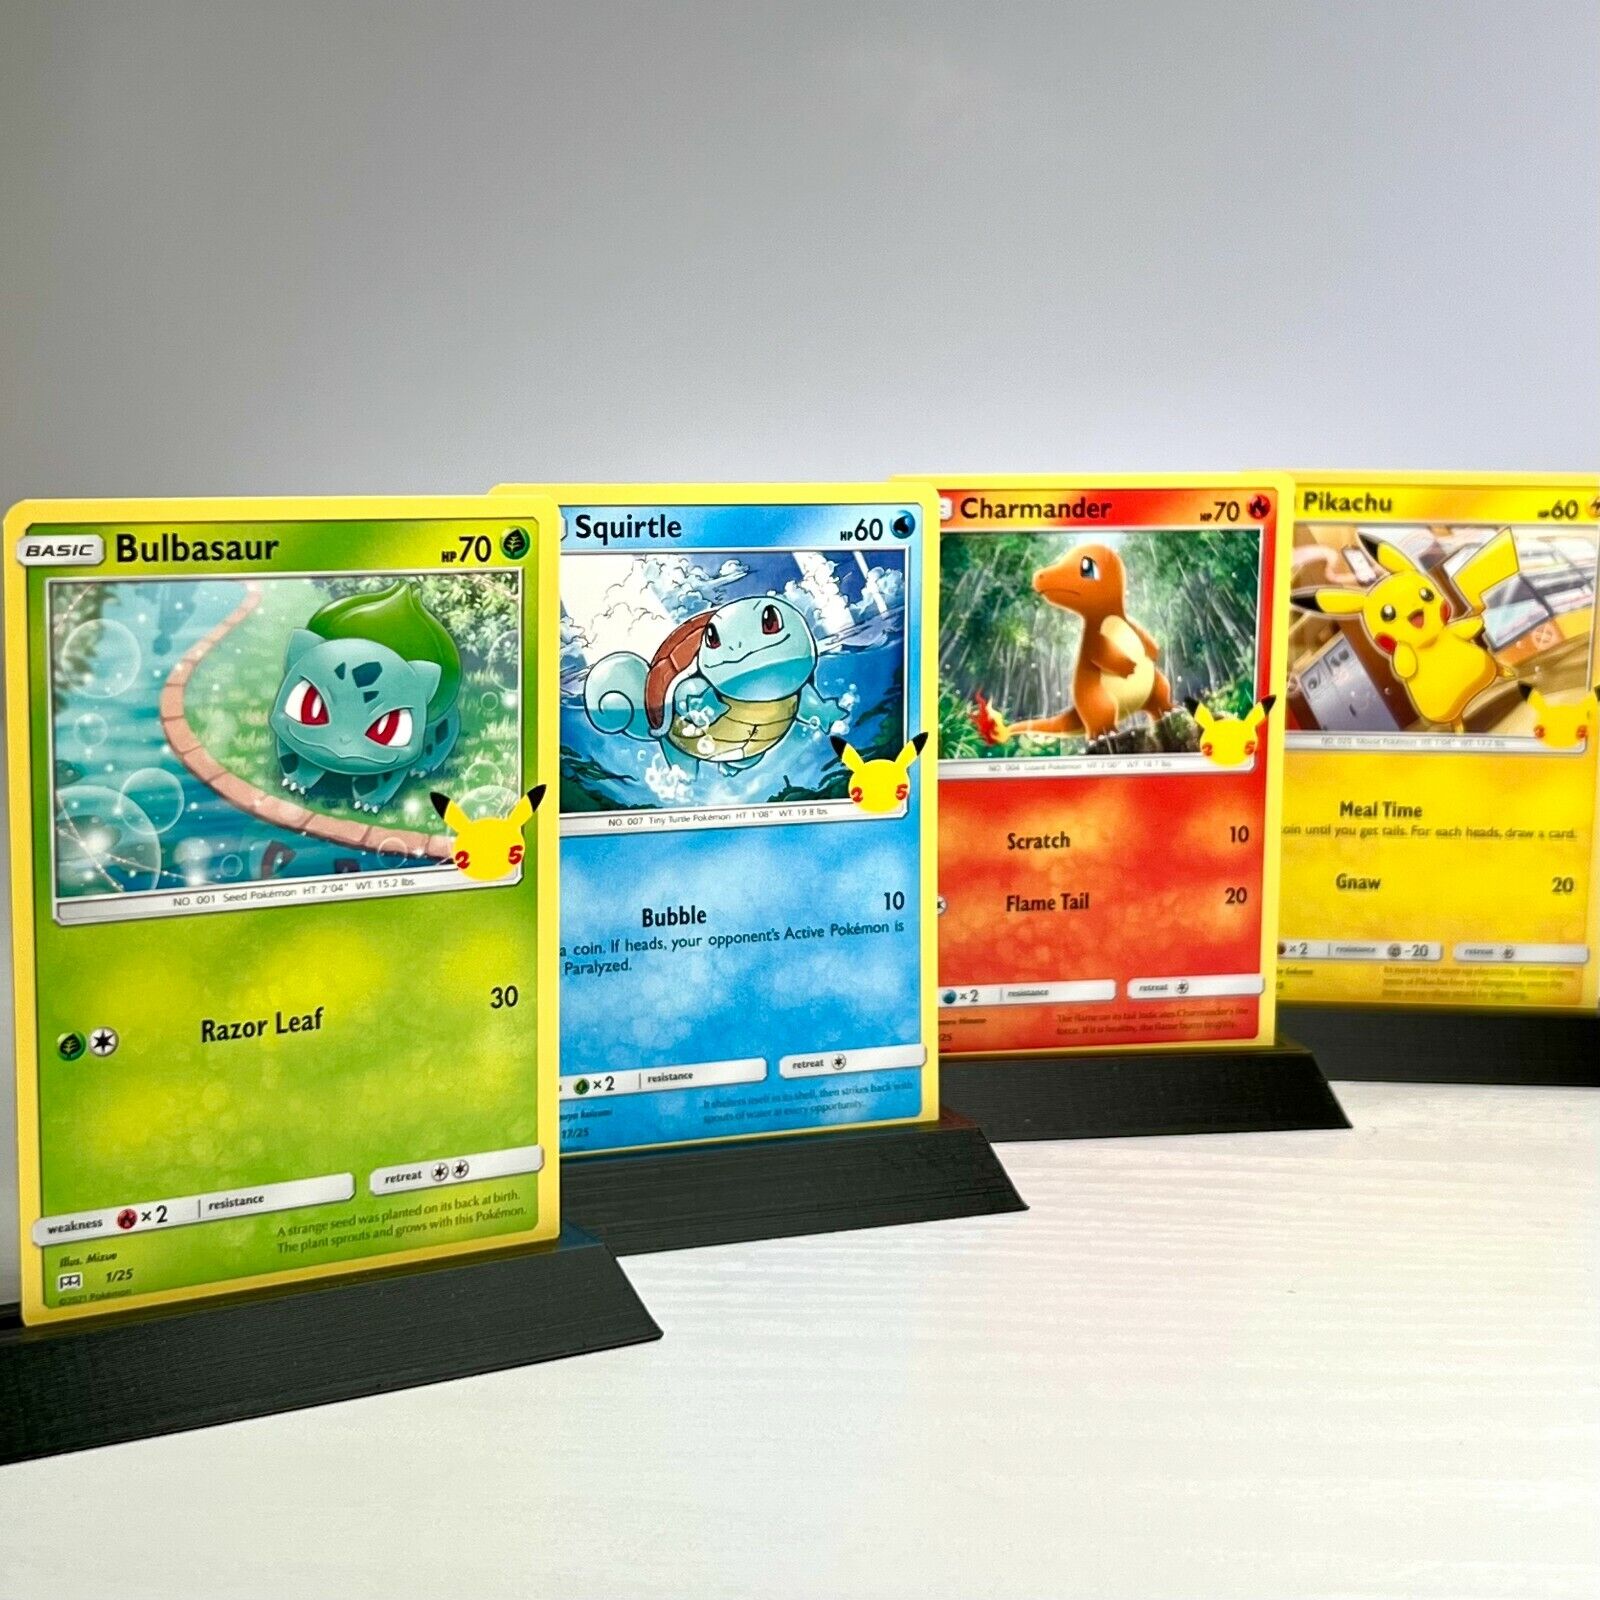 Pokemon McDonald’s Promos - Bulbasaur Squirtle Charmander Pikachu - 4 Card Set